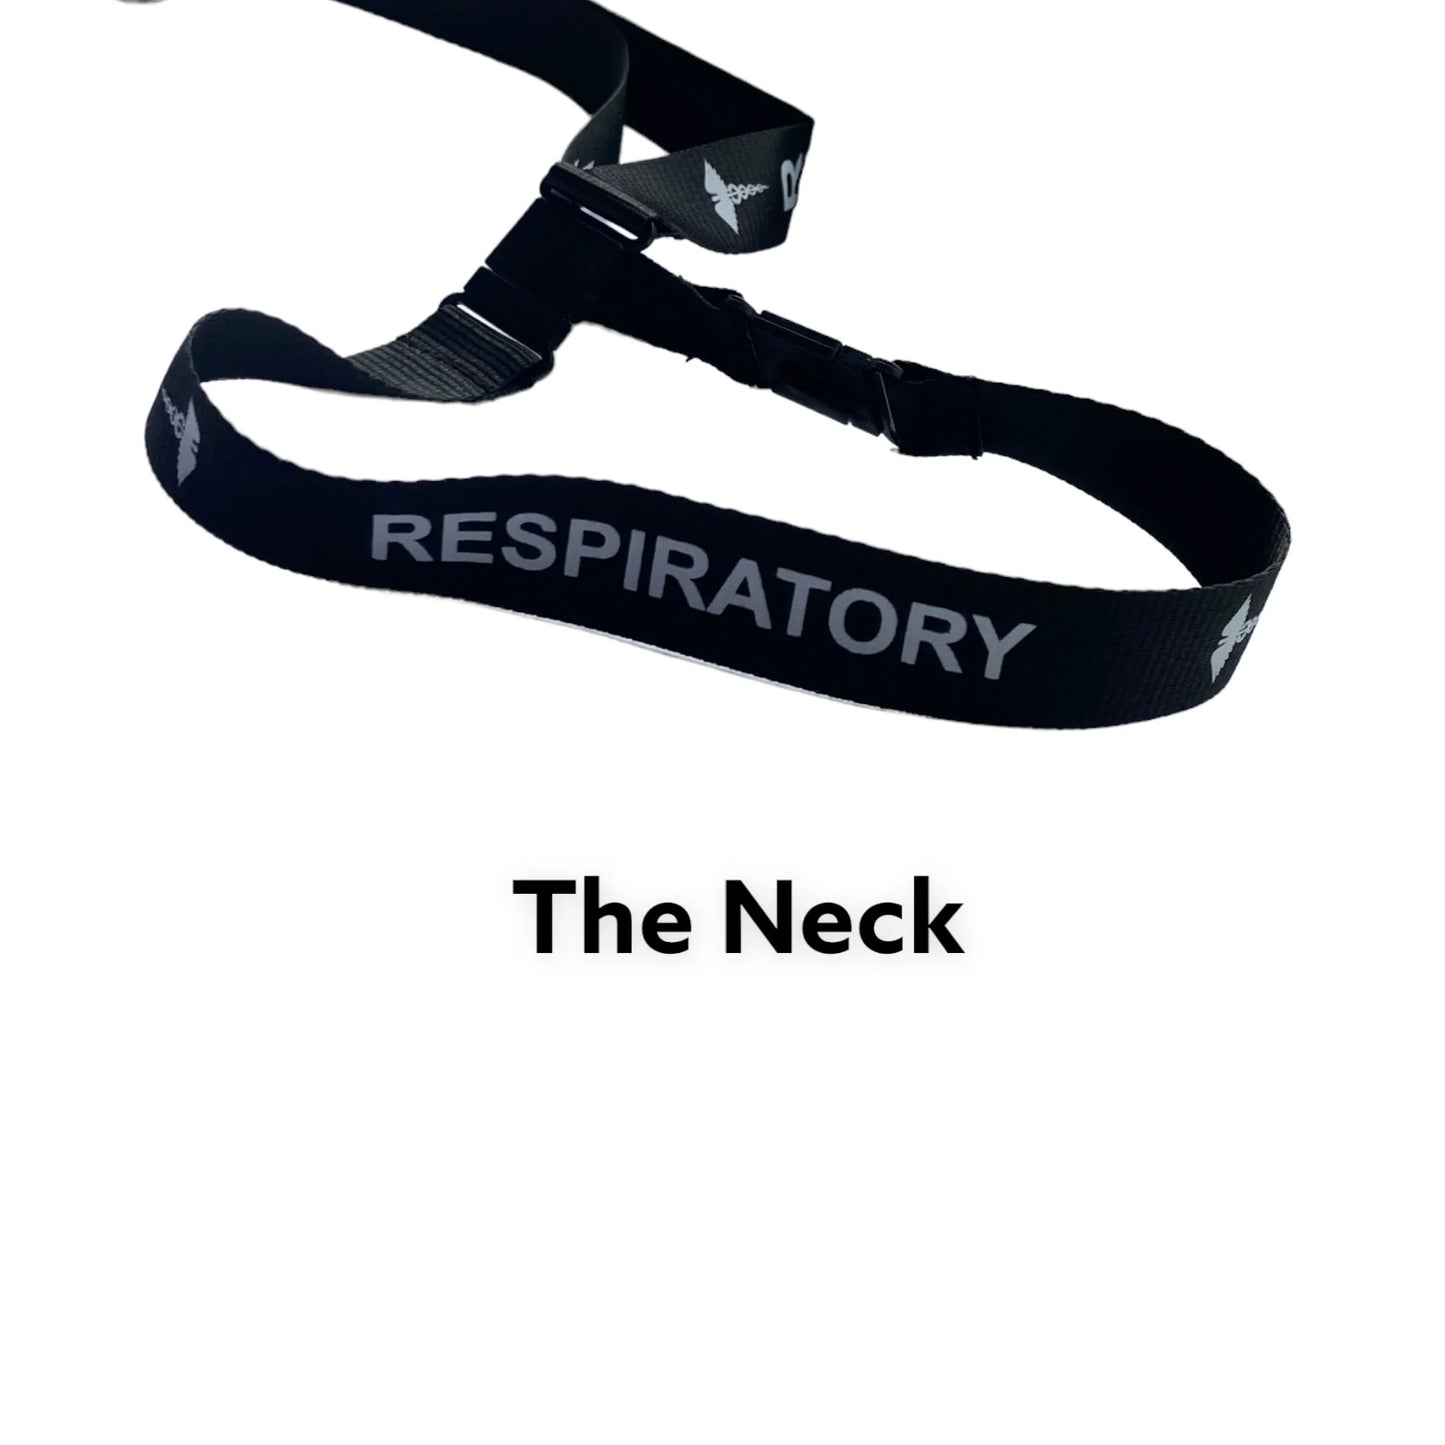 BLACK RT LANYARD, Badge holder/key holder with 2 breakaways, Respiratory Therapist Gift